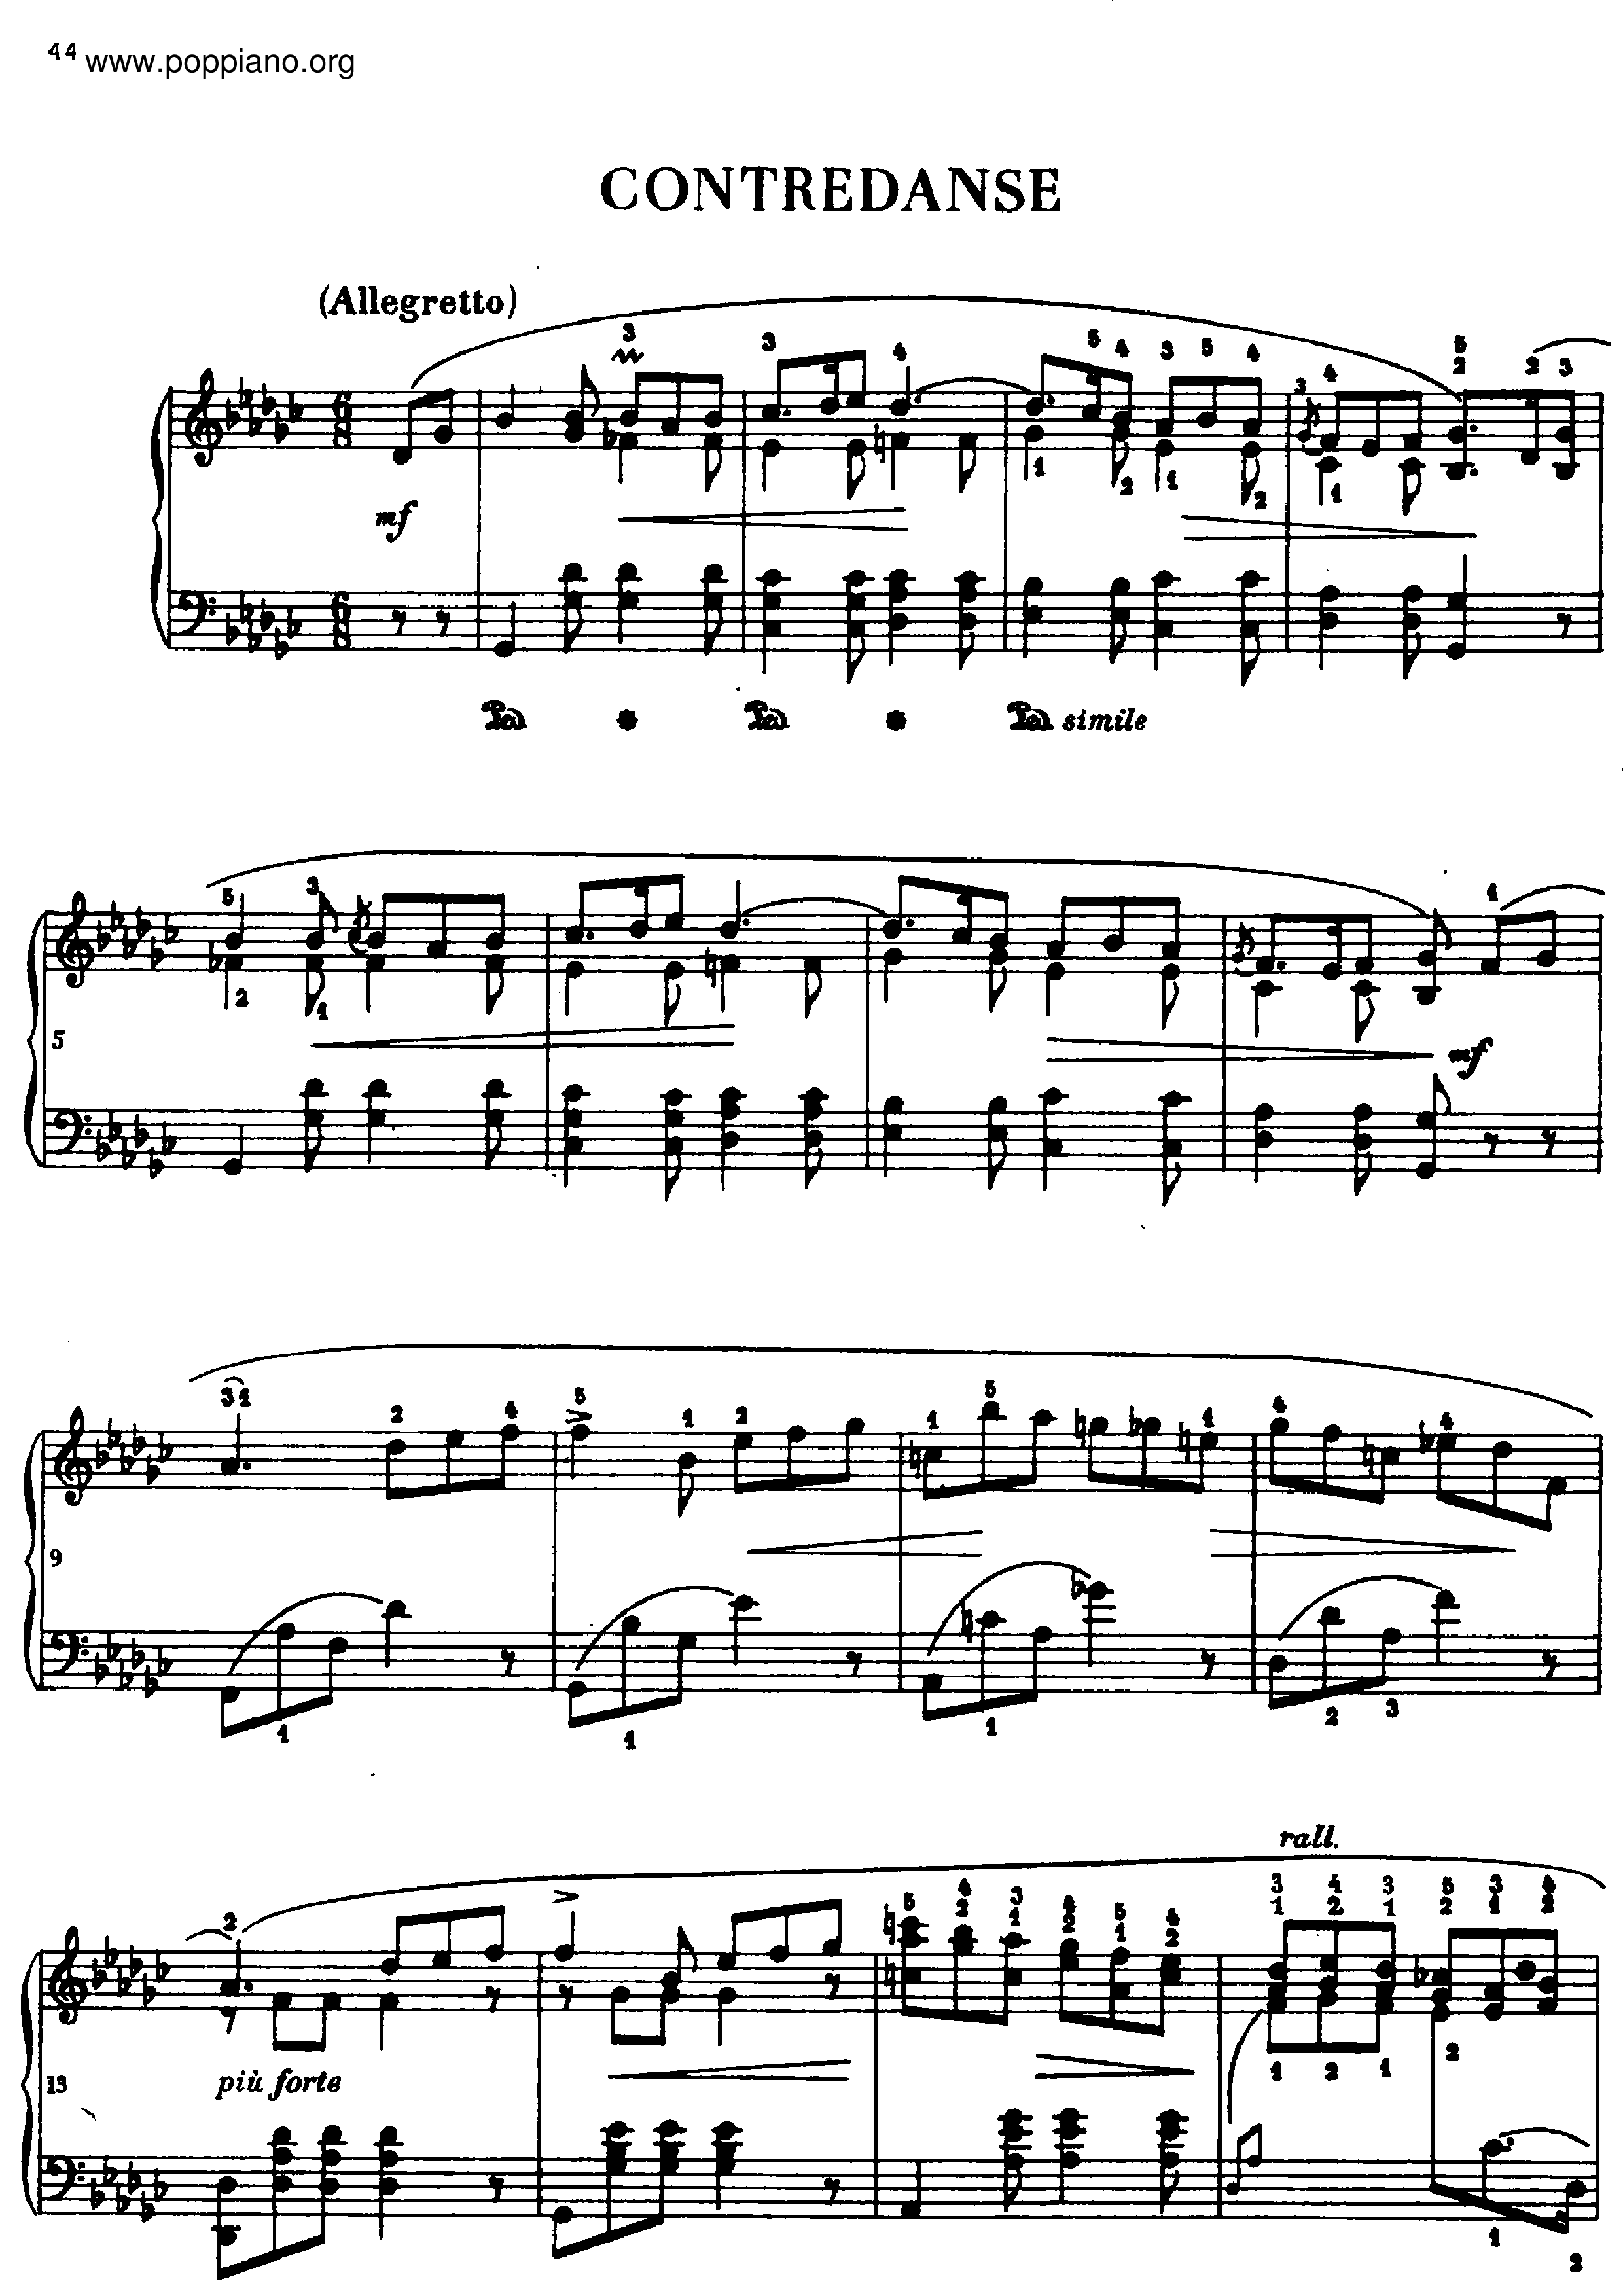 Contredanse in G sharp major琴谱